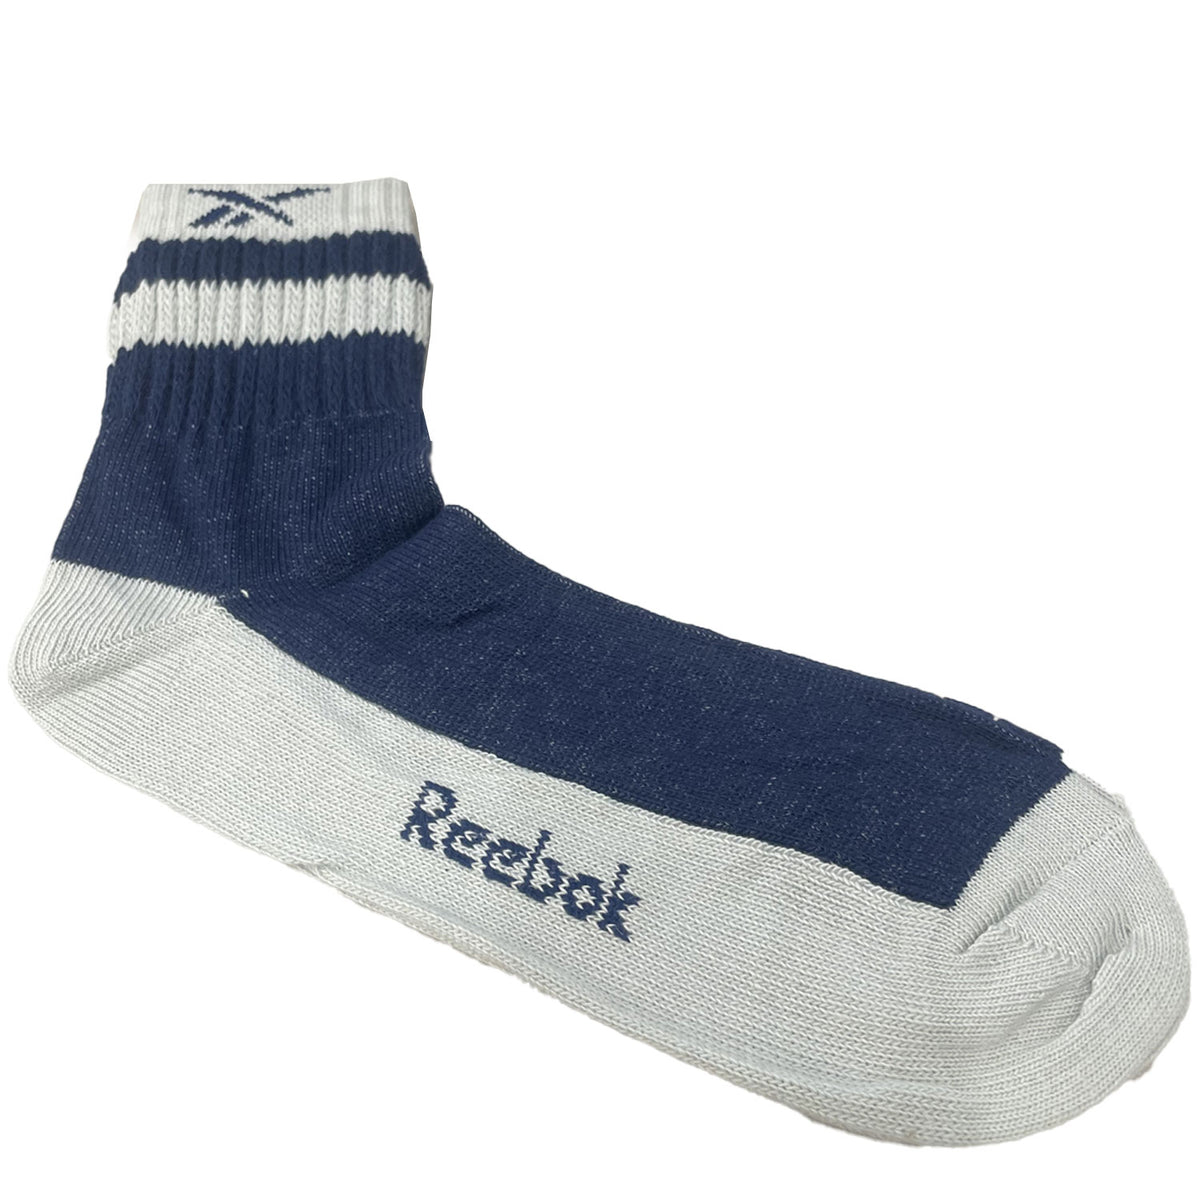 Reebok Womens Foldover Socks III